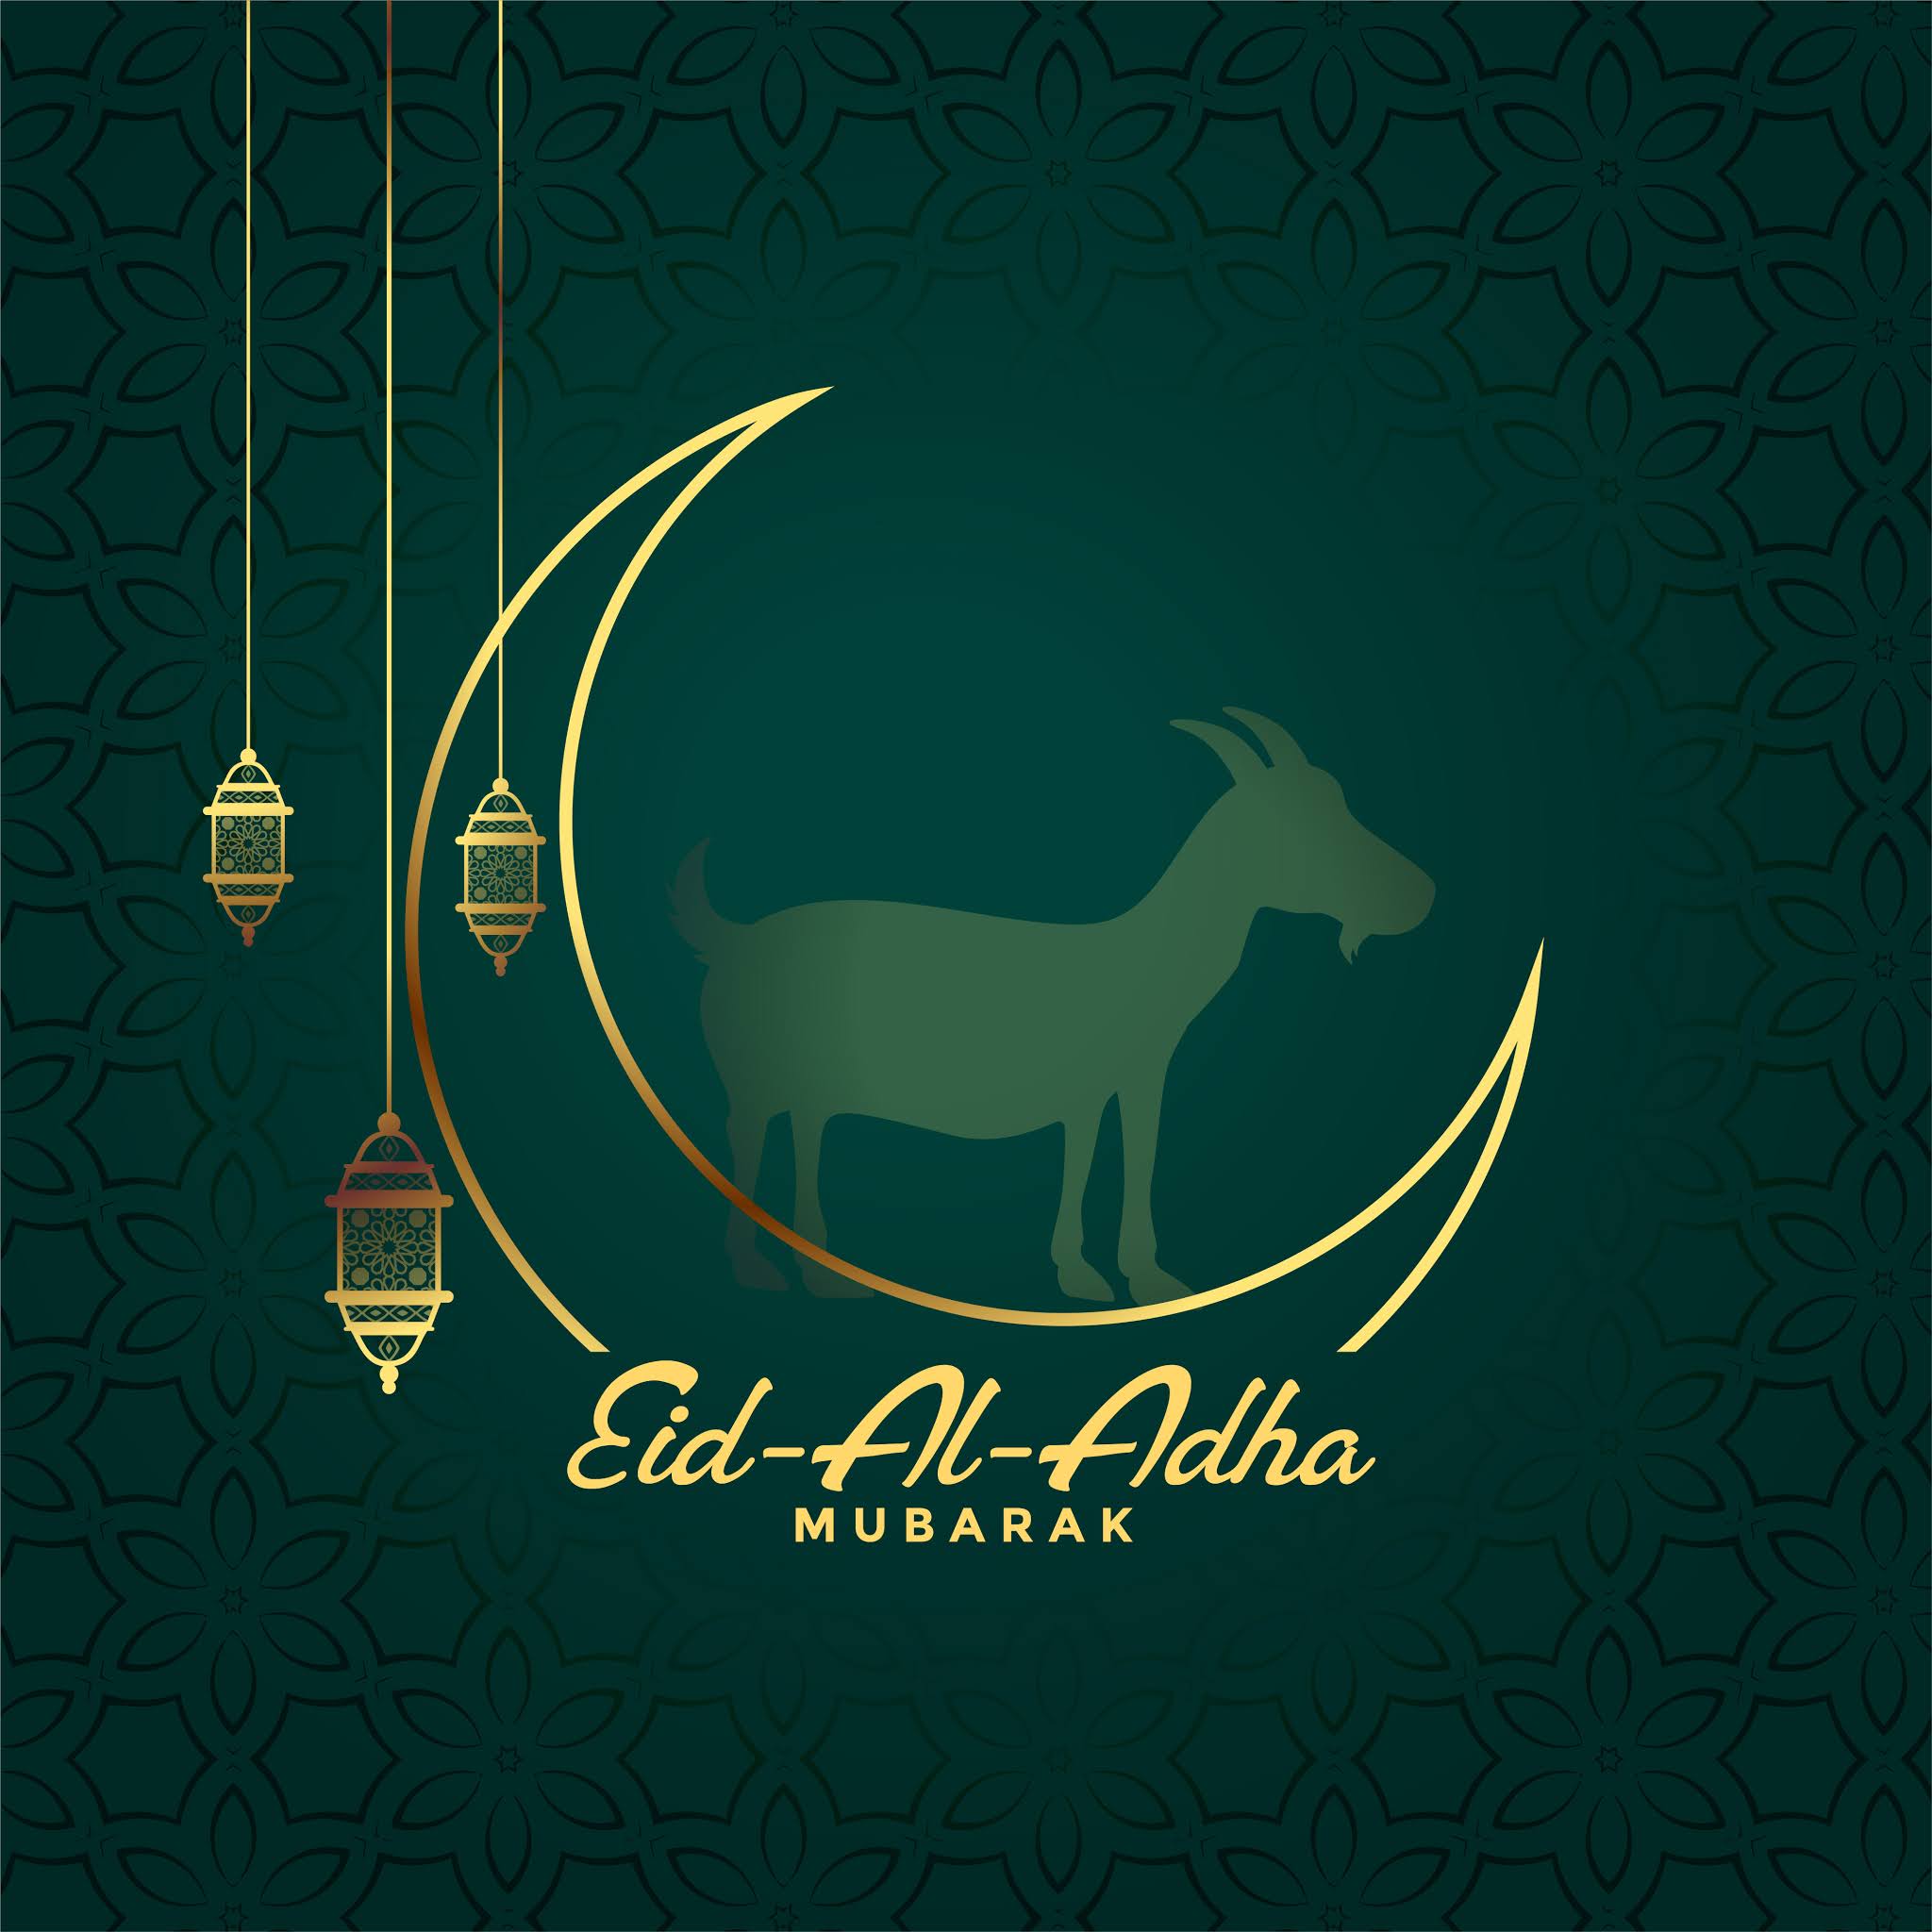 Download Eid-Al-Adha Mubarak 2020 Images HD | Eid-Ul-Adha Mubarak 2020 ...